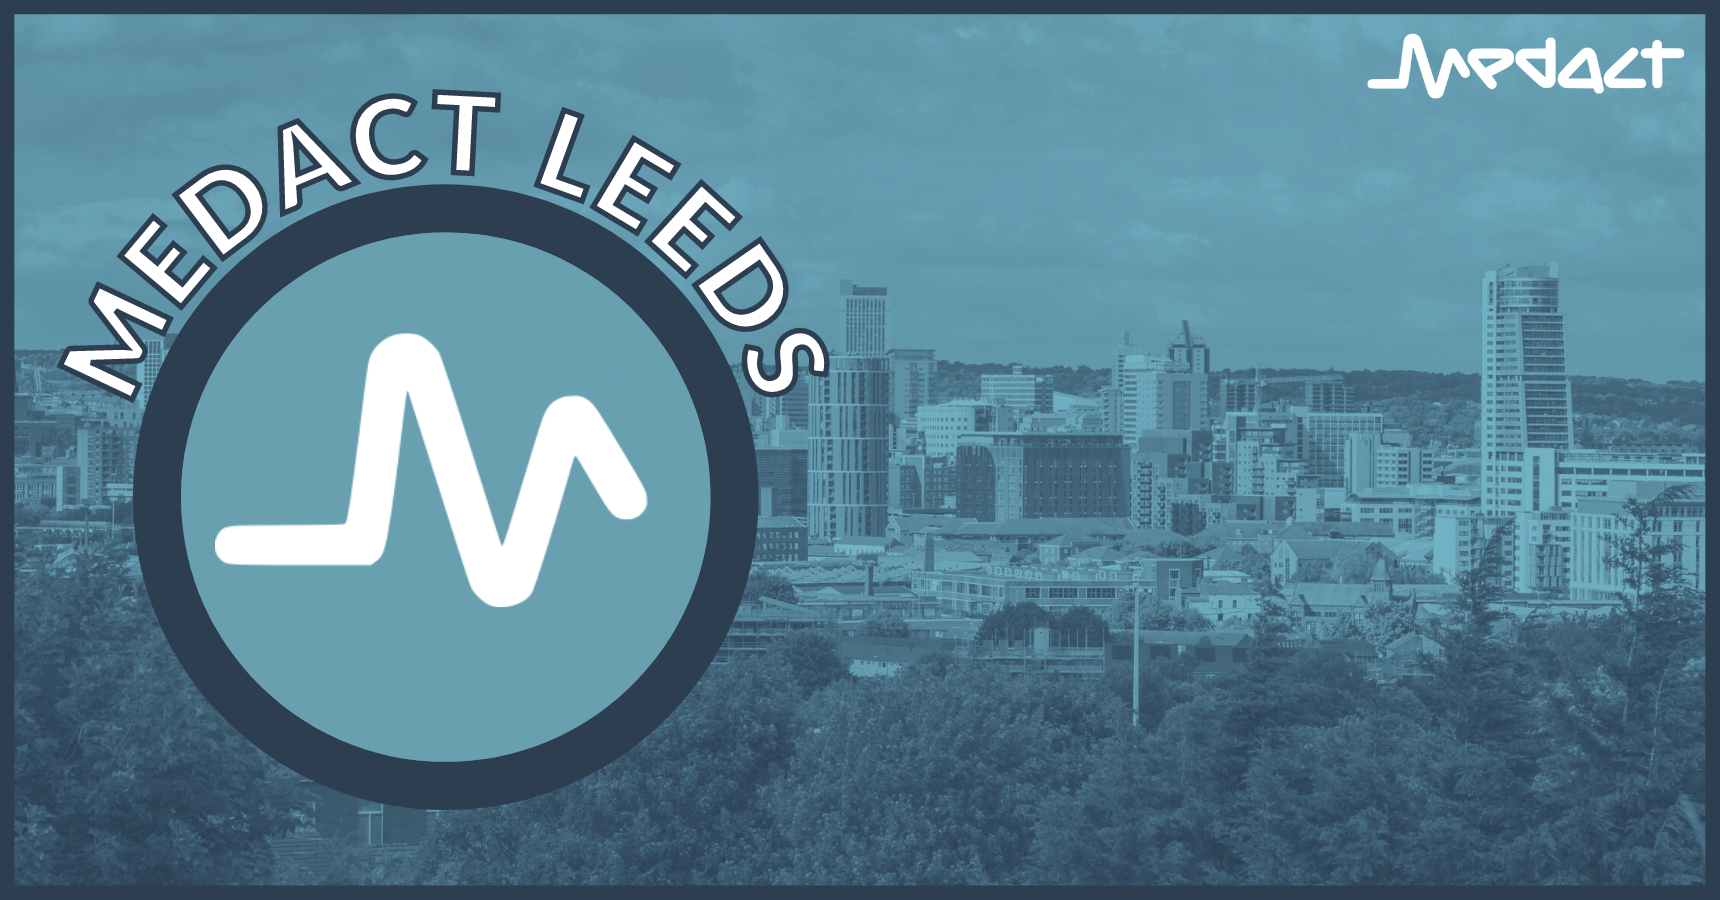 Medact Leeds group meeting: May